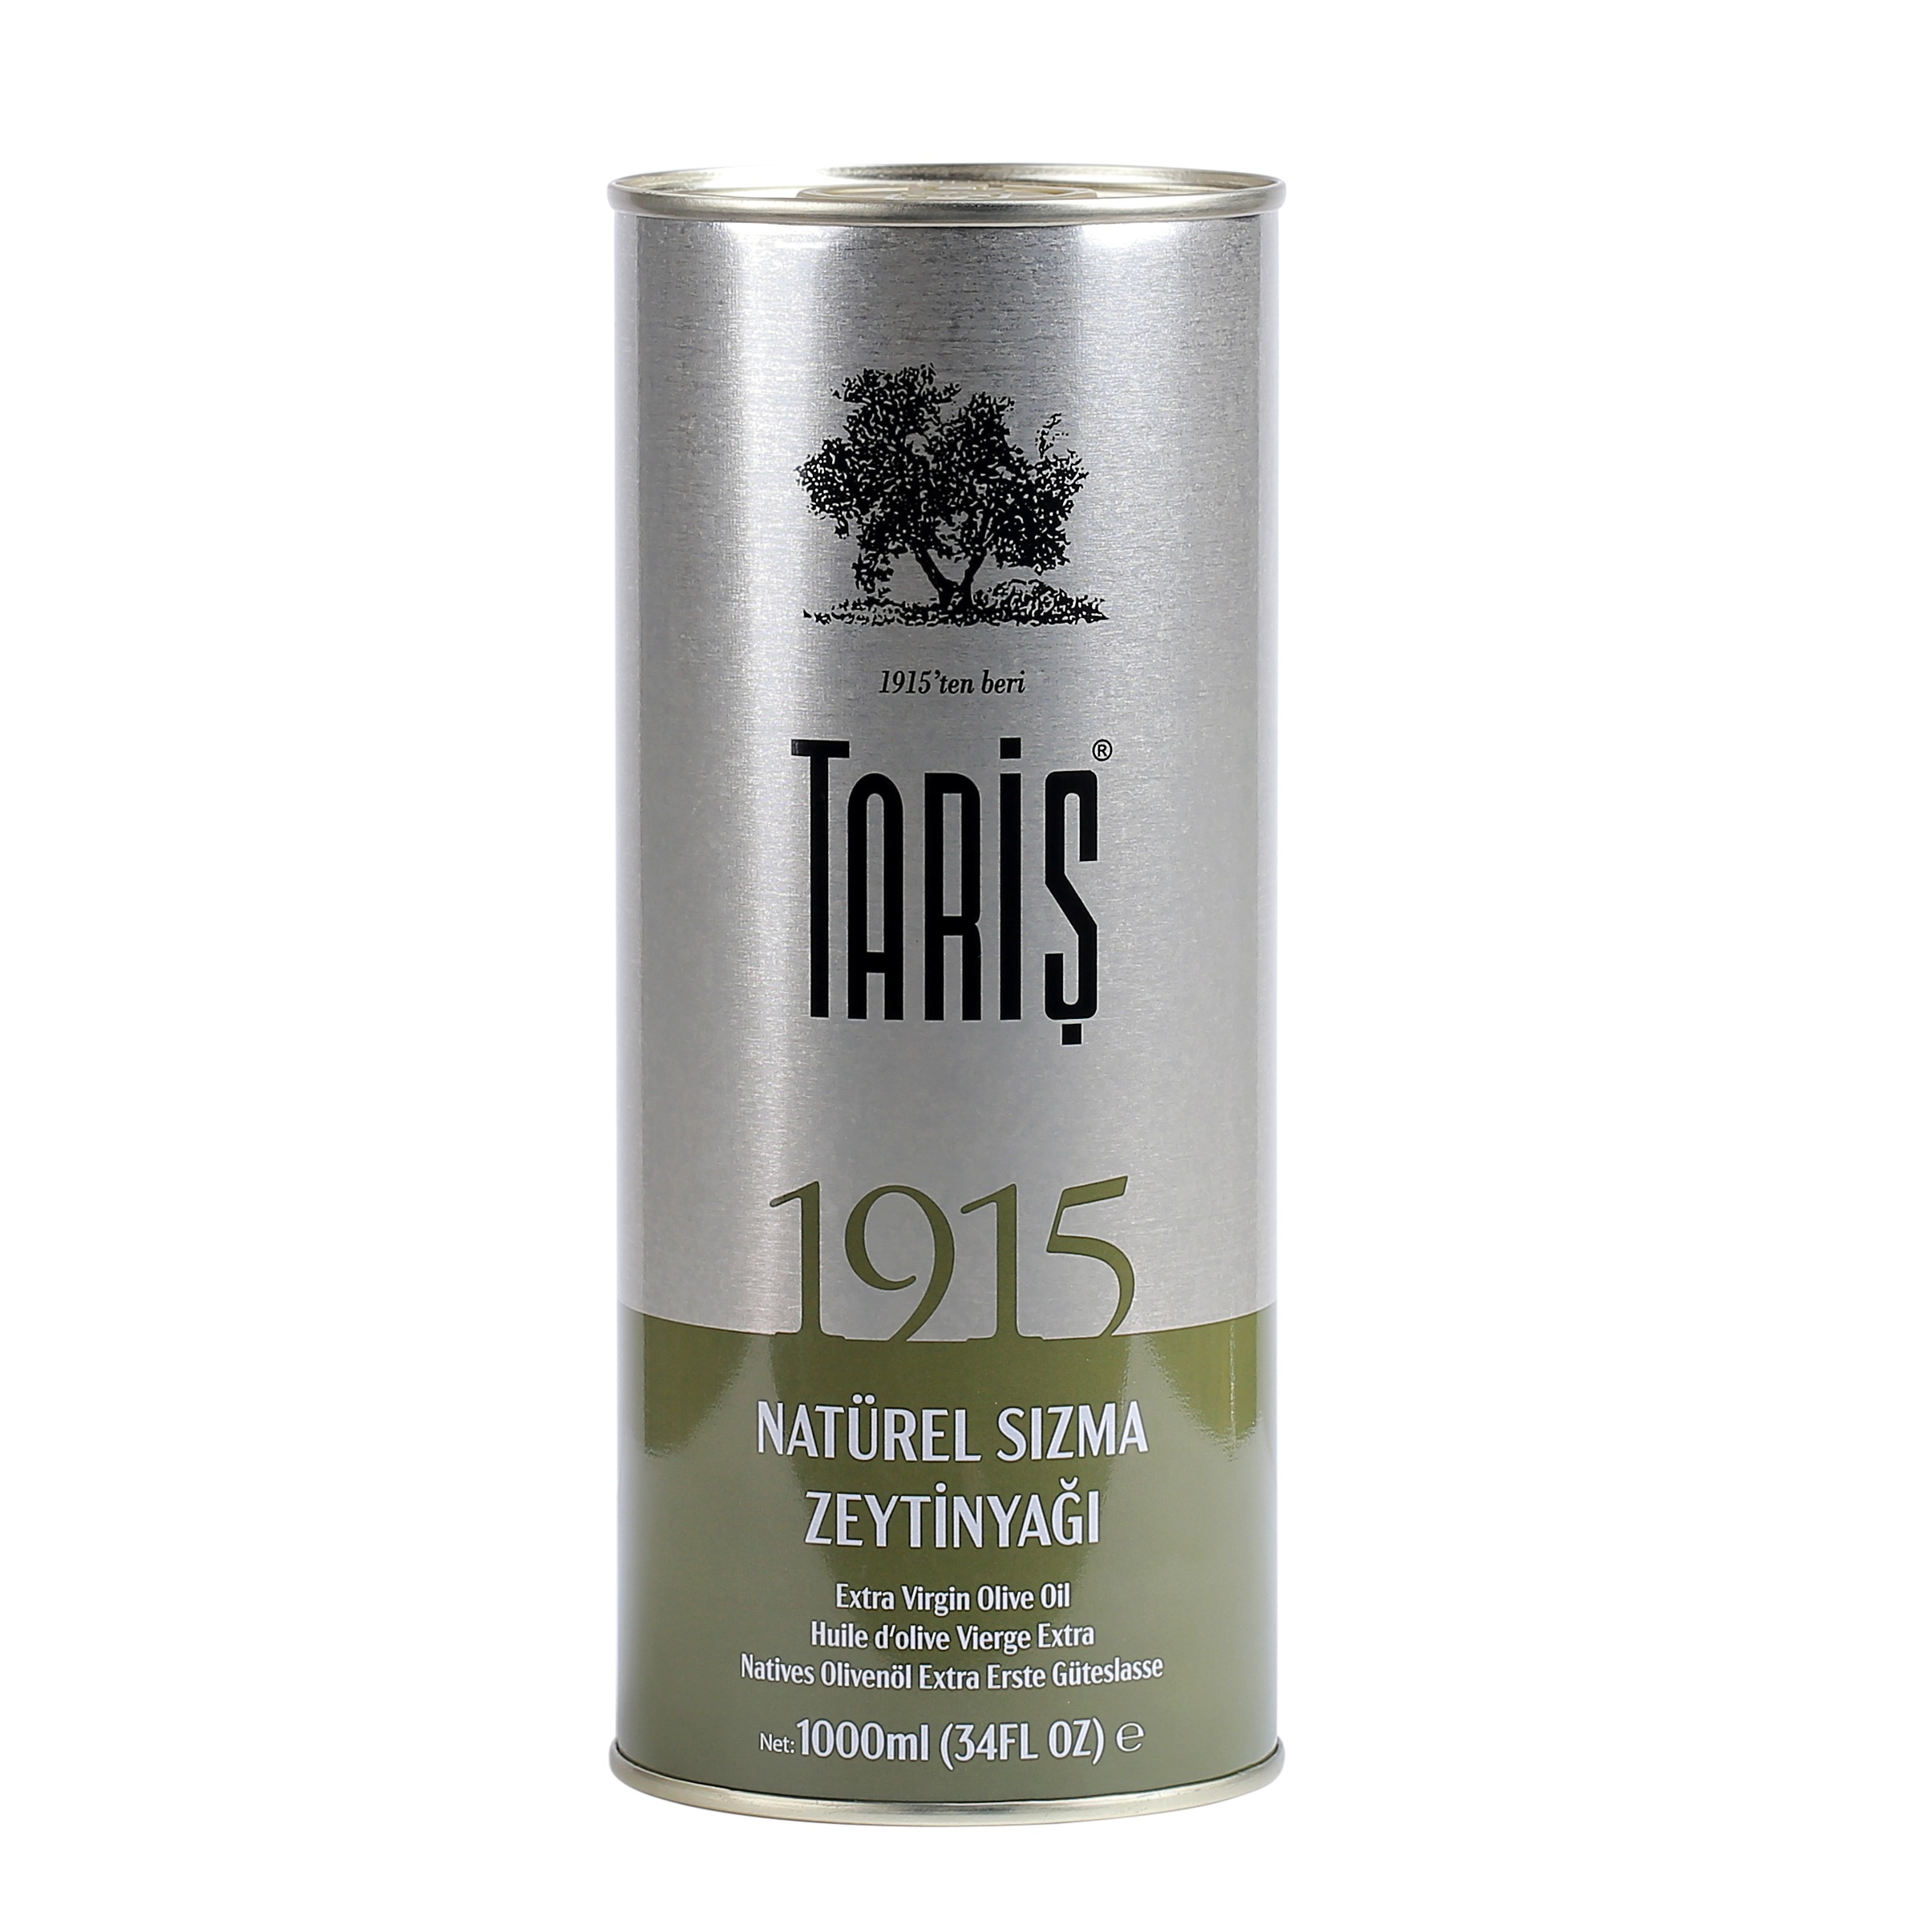 Taris Extra Virgin Olive Oil Max.Acidity 0.8 00 ml น้ำมันมะกอกบริสุทธิ์วิธีธรรมชาติ Max.Acidity 0.8% ไซร์ 1 ลิตร